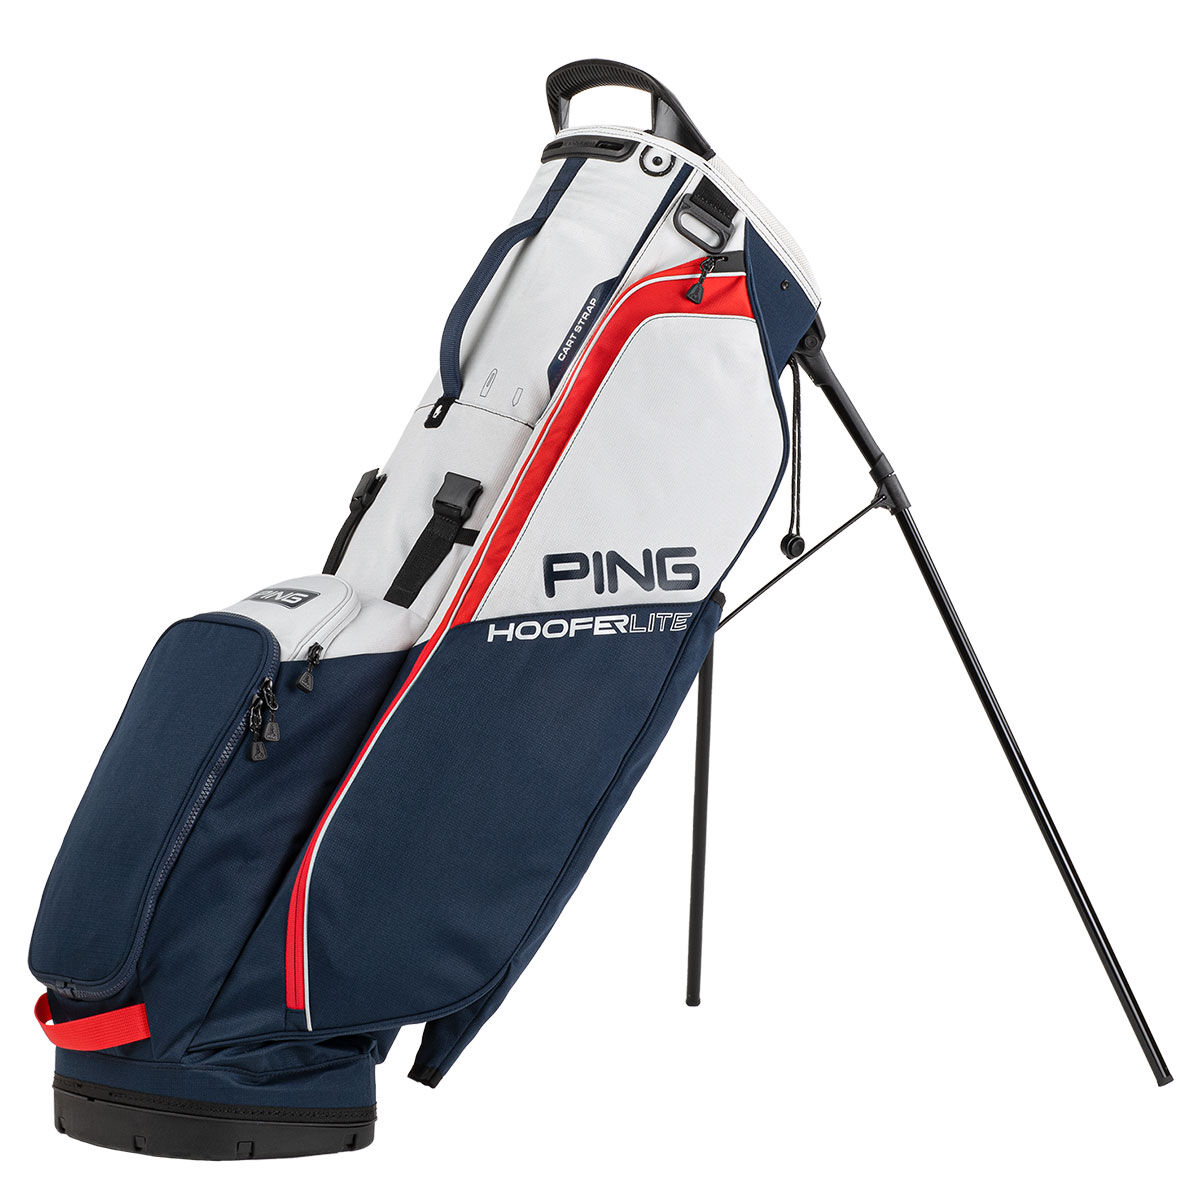 PING Hoofer Lite 231 Golf Stand Bag, Navy/platinum red | American Golf